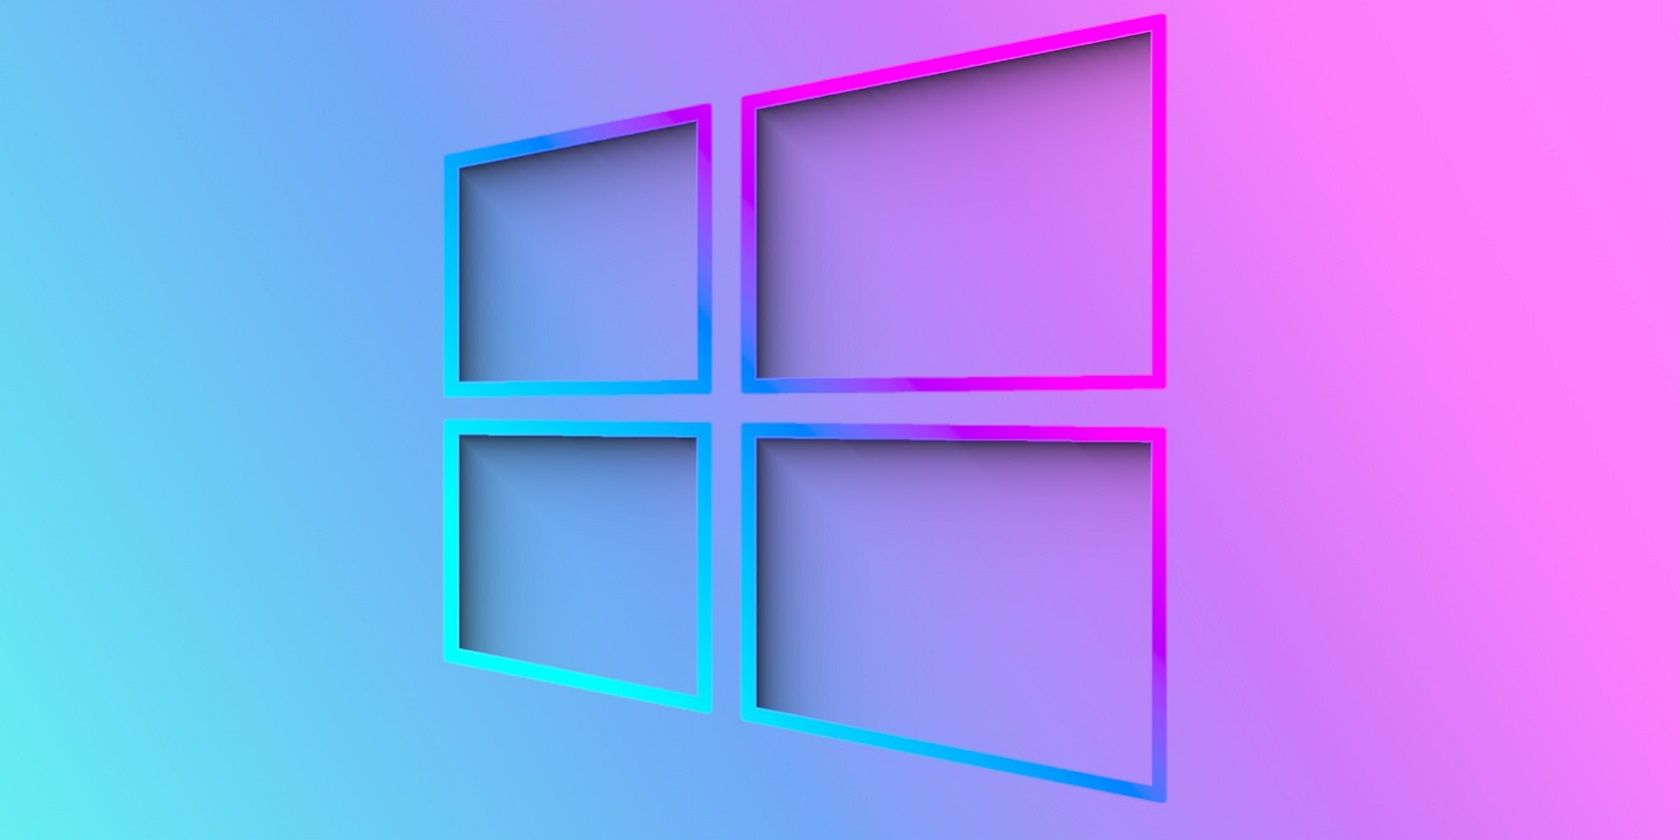 The MS Windows logo